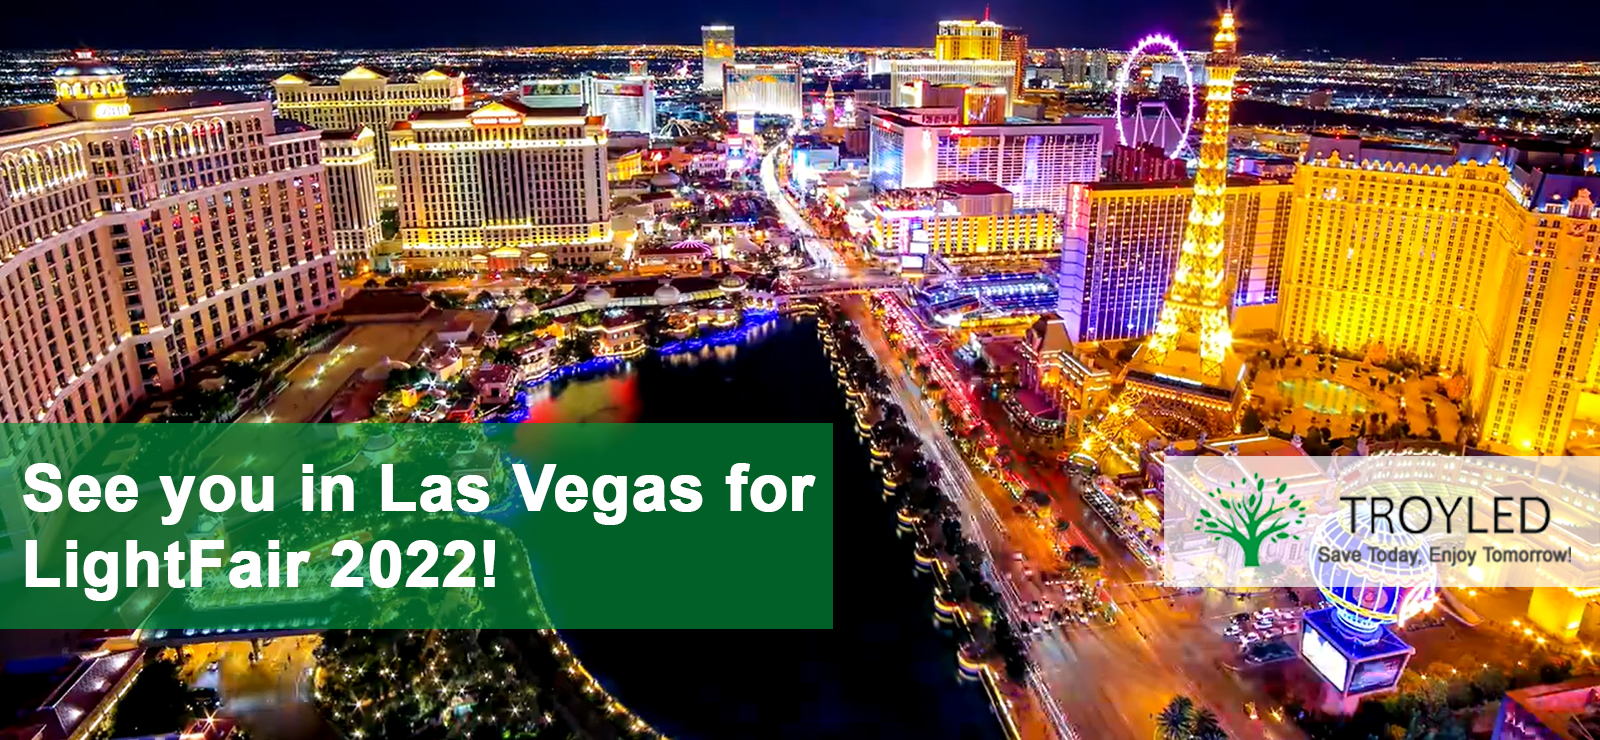 See you in Las Vegas for LightFair 2022